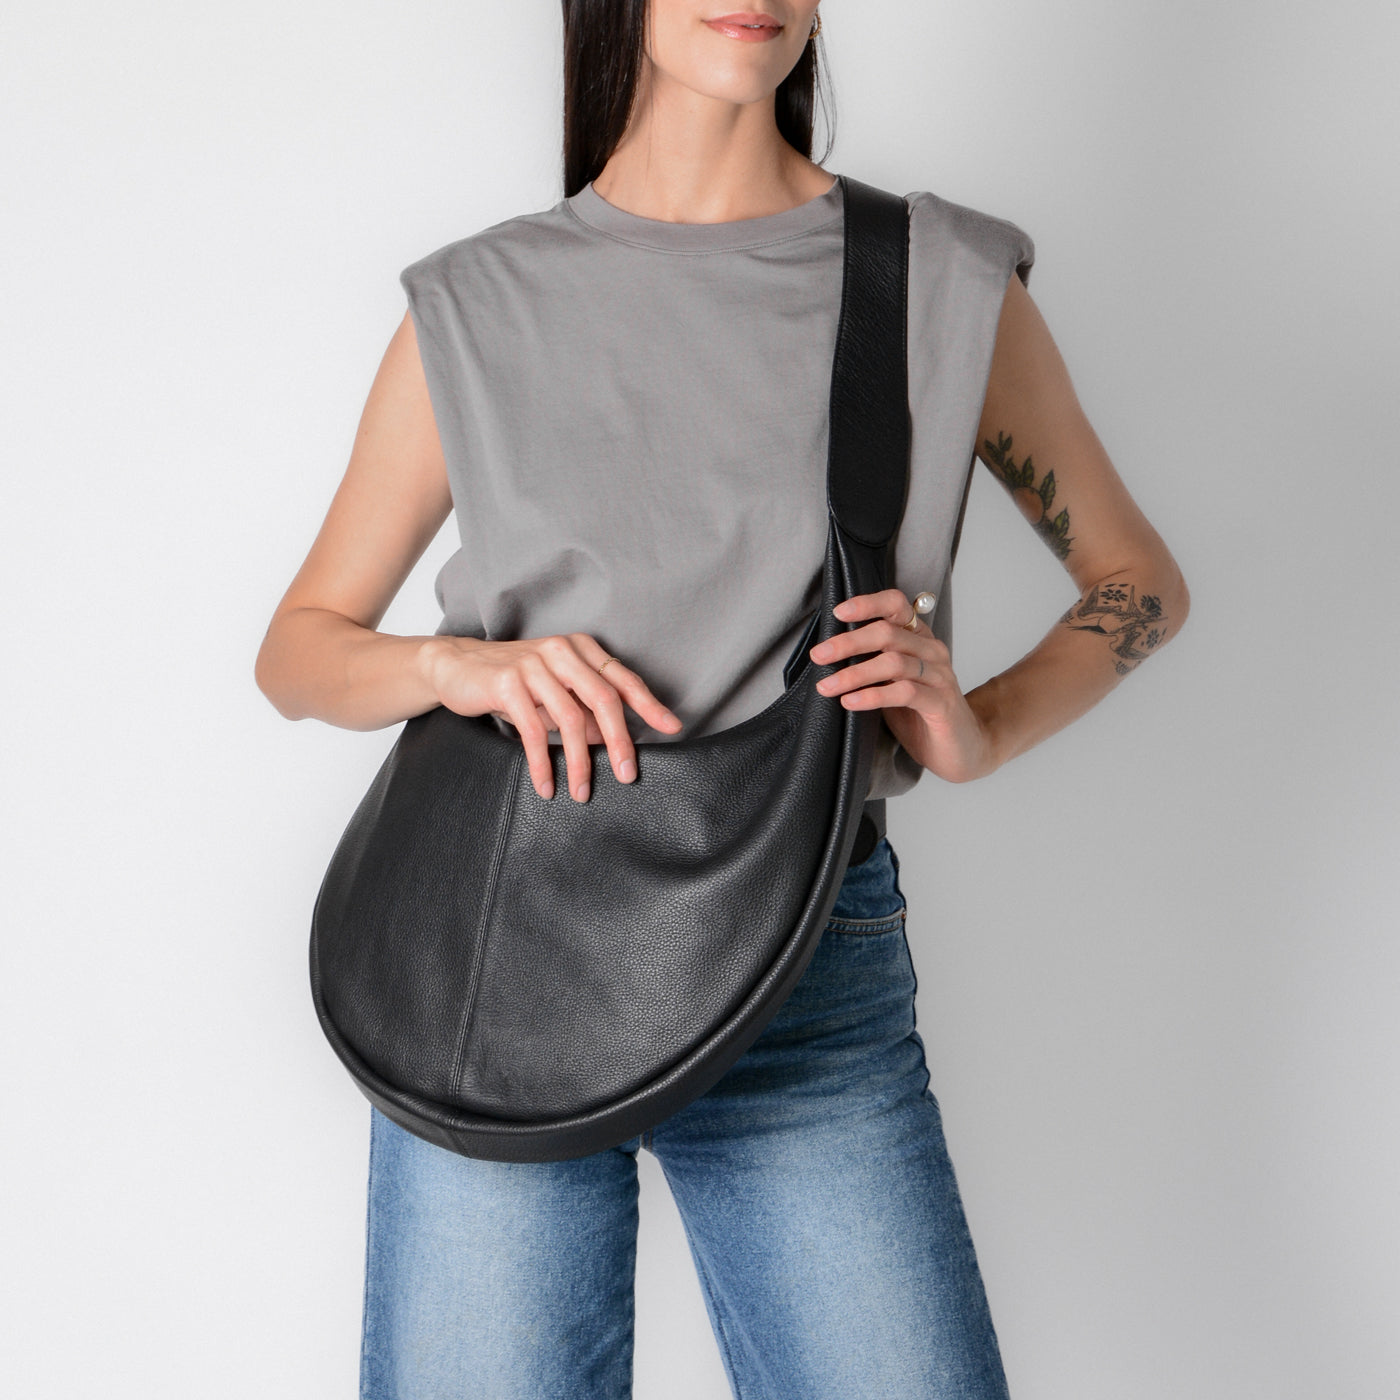 Coach MOON BAG Novelty REGENERATIVE Leather Crossbody Bag RUNWAY - NEW |  eBay